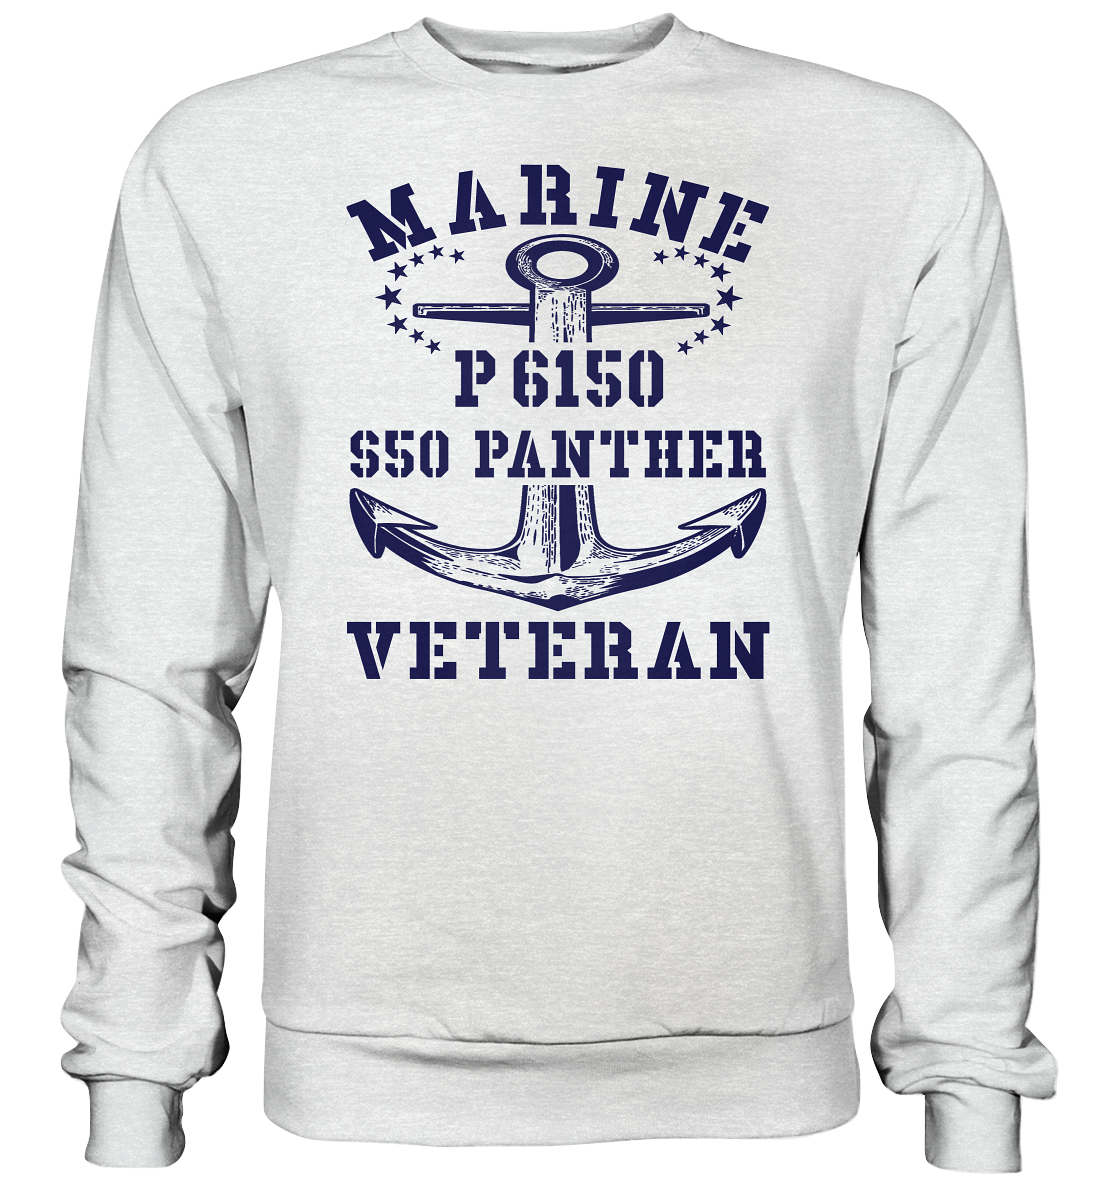 P6150 S50 PANTHER Marine Veteran - Premium Sweatshirt